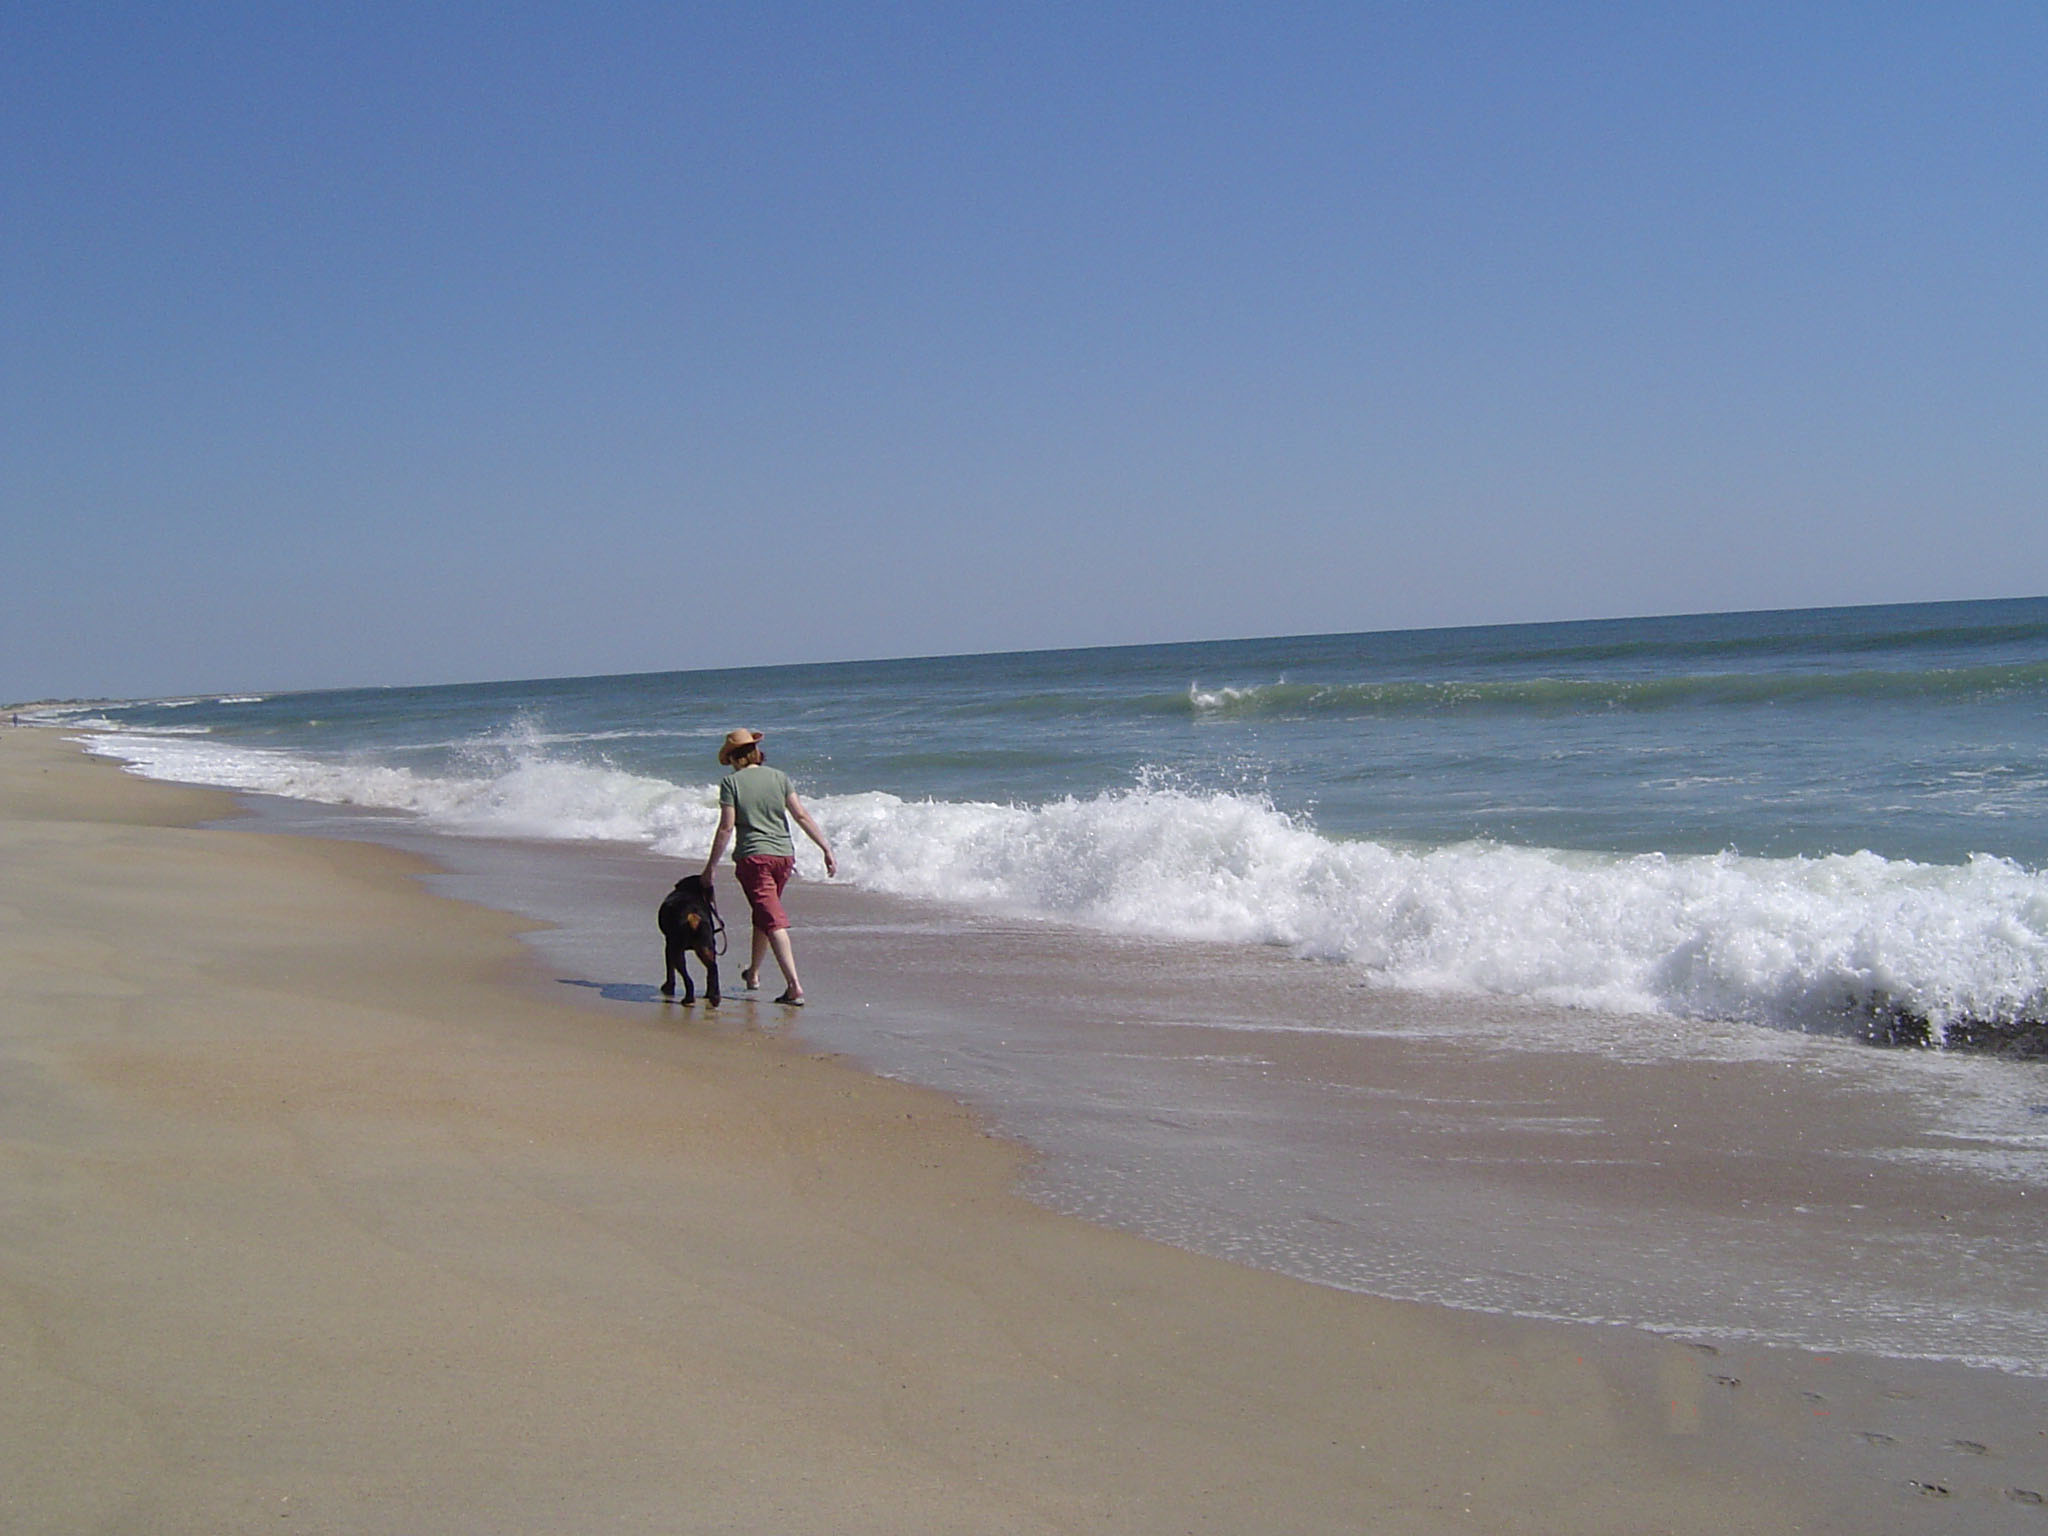 Laura walking Odin on a Hatteras, NC beach